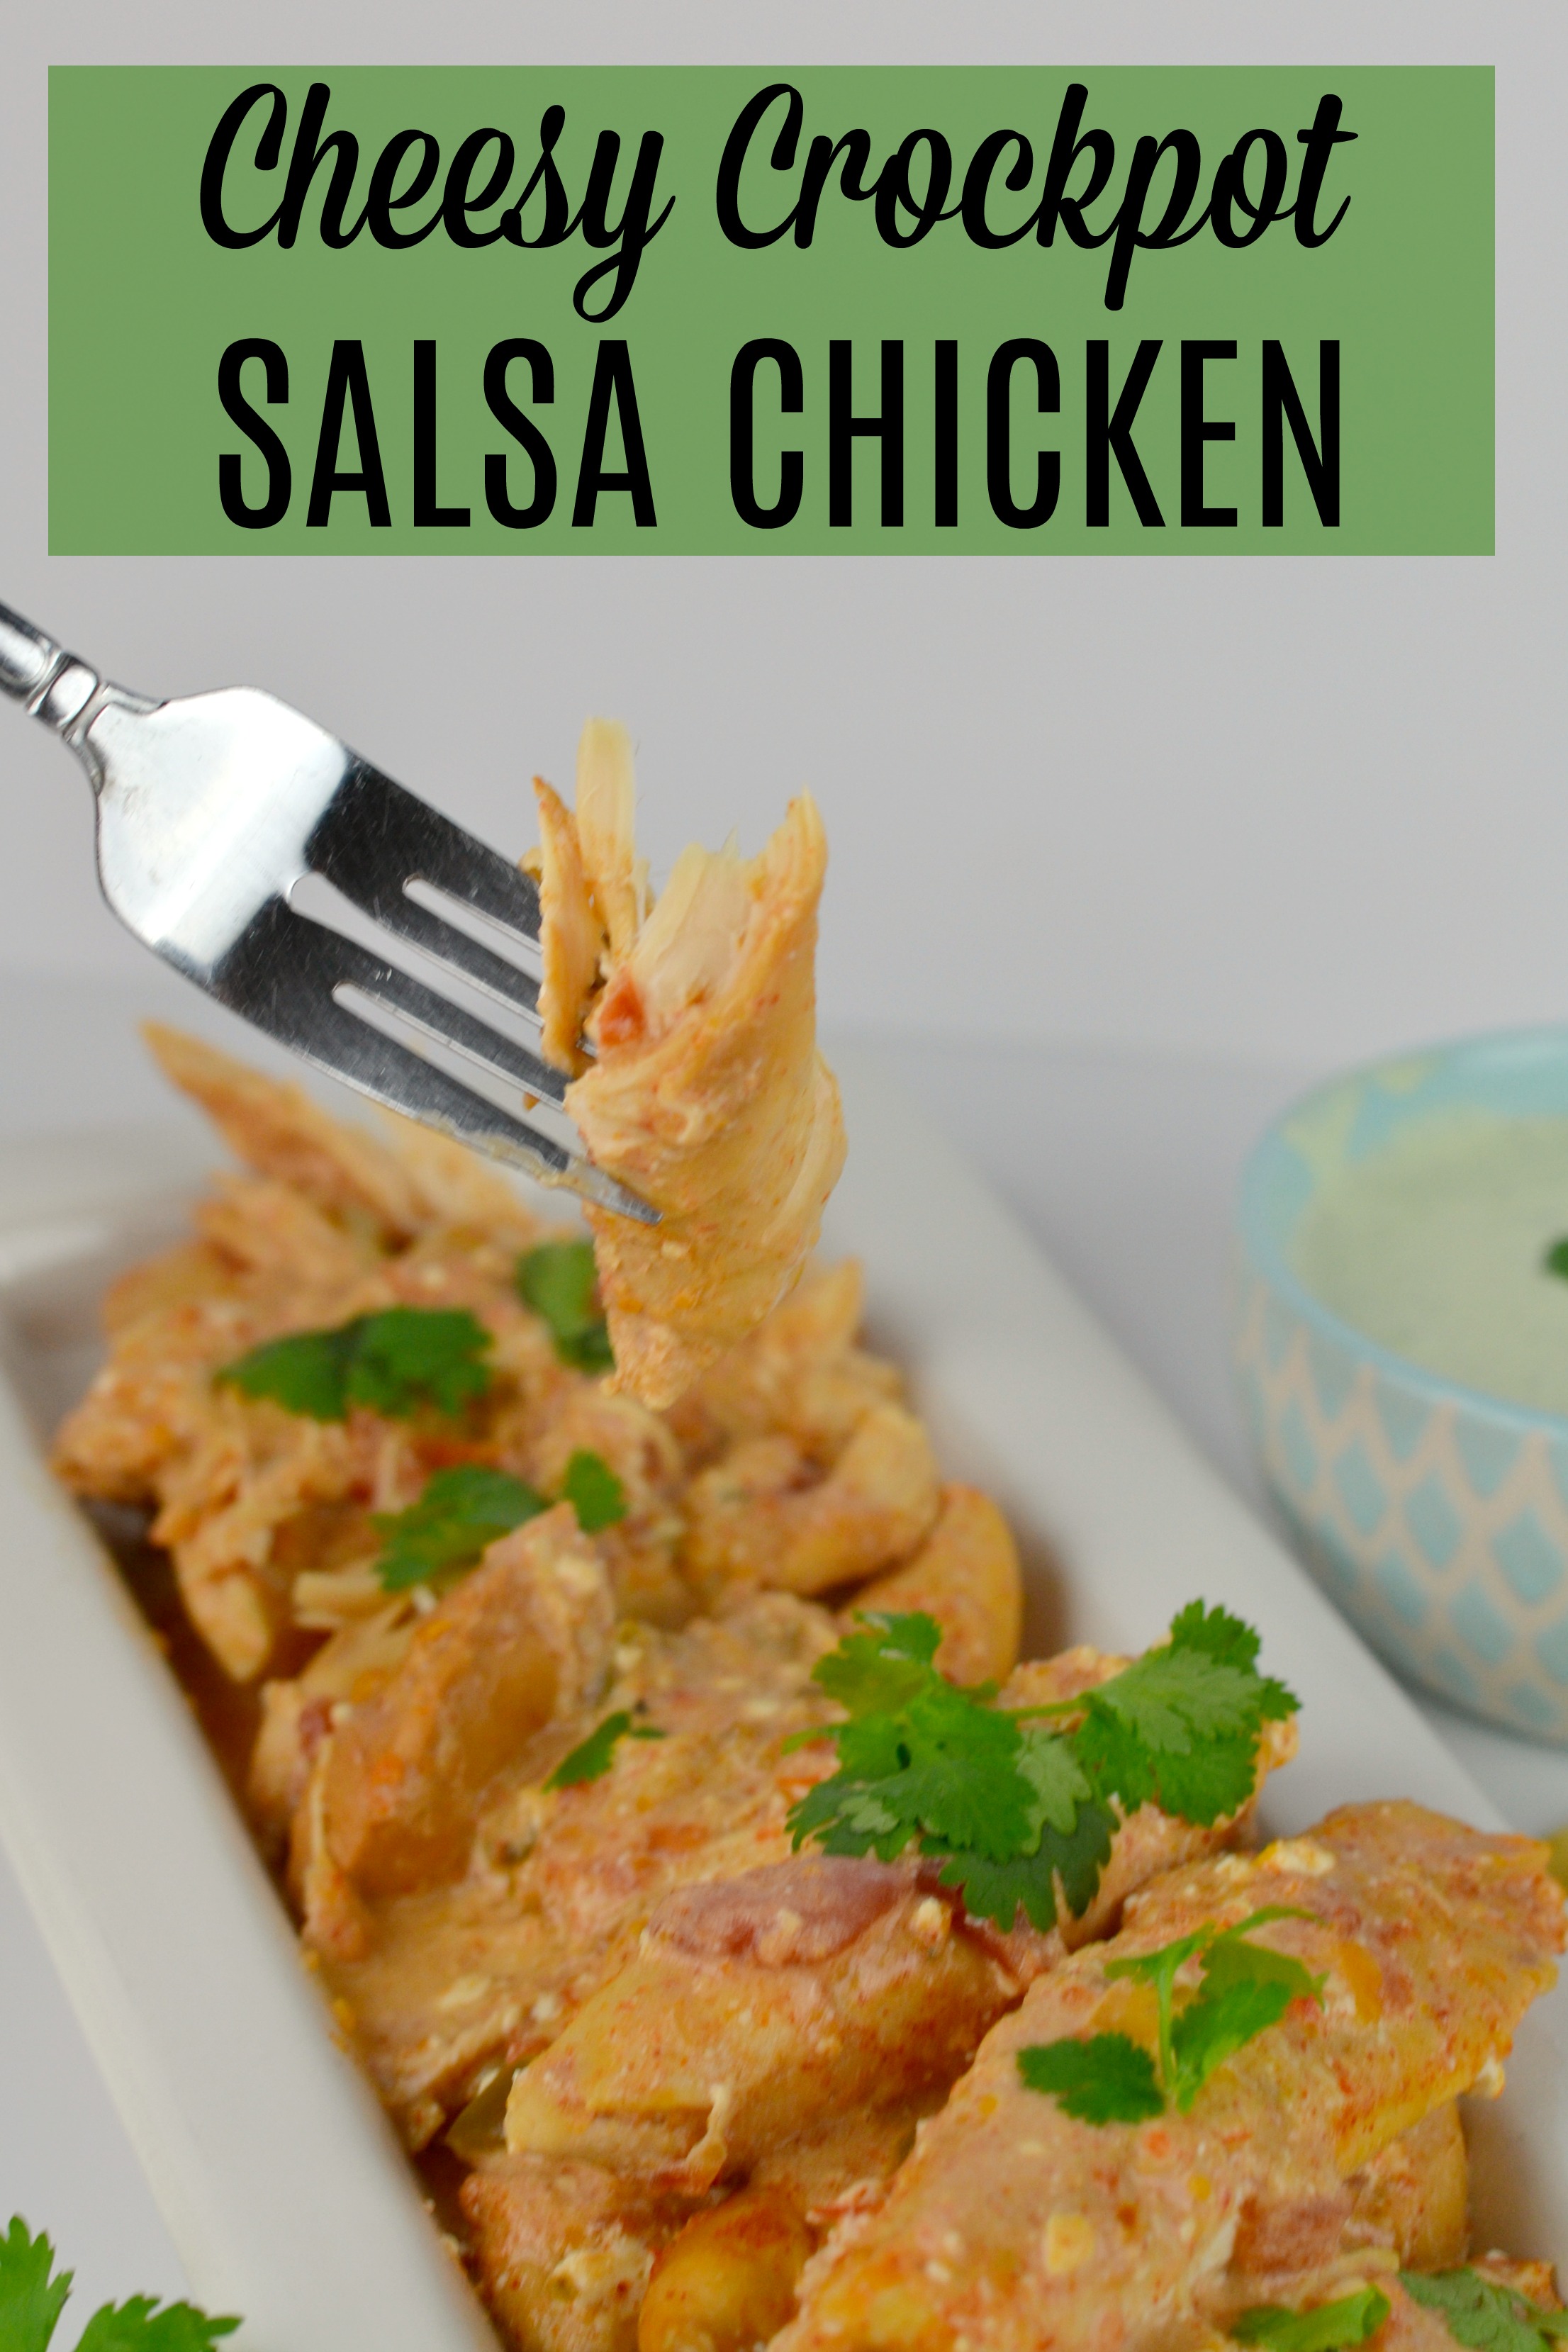 Cheesy Crockpot Salsa Chicken with Rice